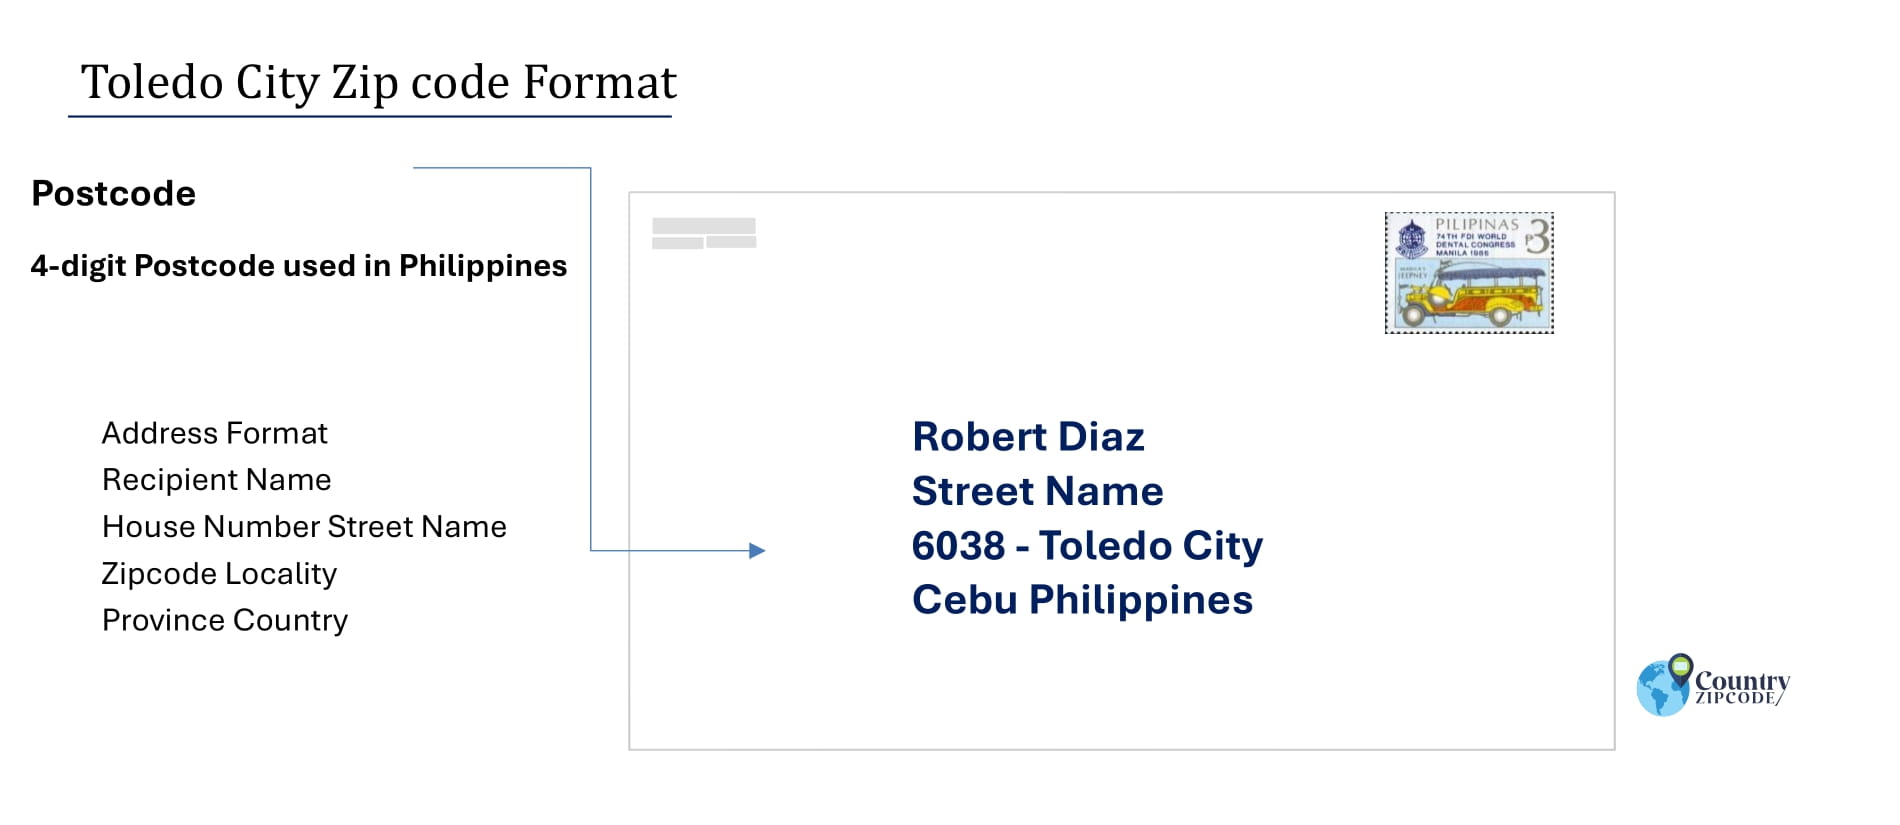 example of Toledo City Philippines zip code and address format